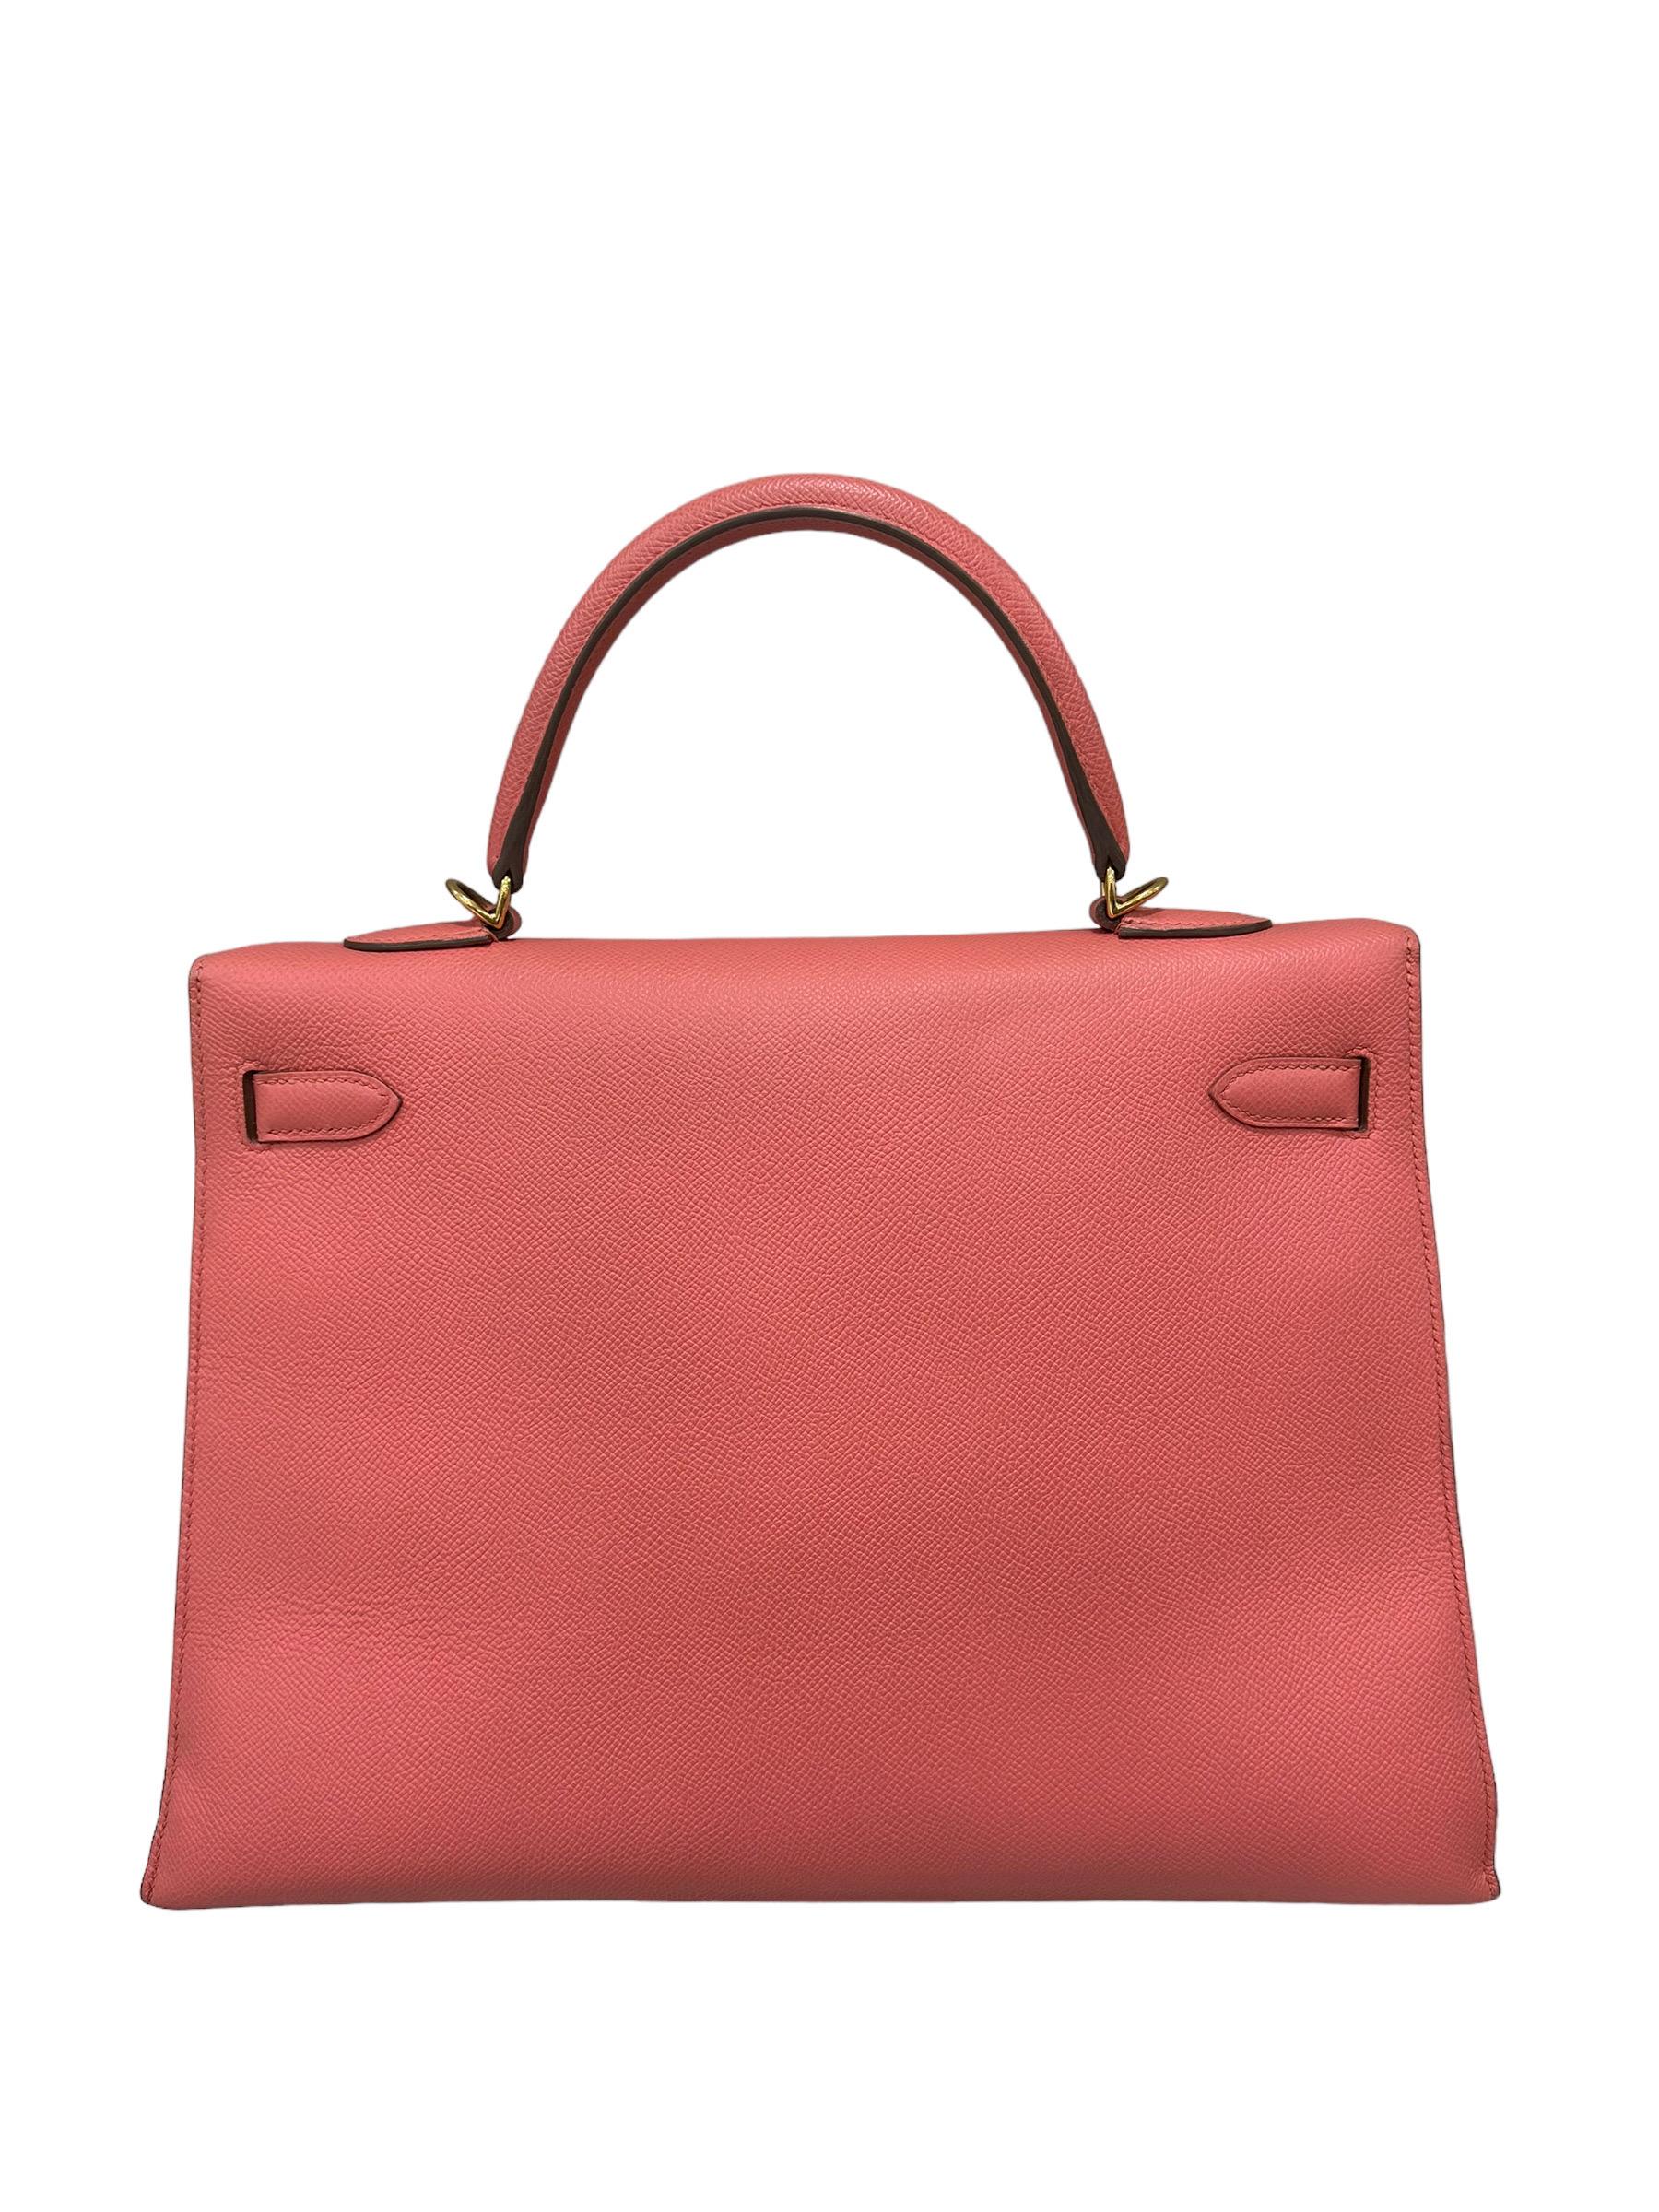 Hermès Kelly 35 Epsom Rose Jaipur Top Handle Bag 2